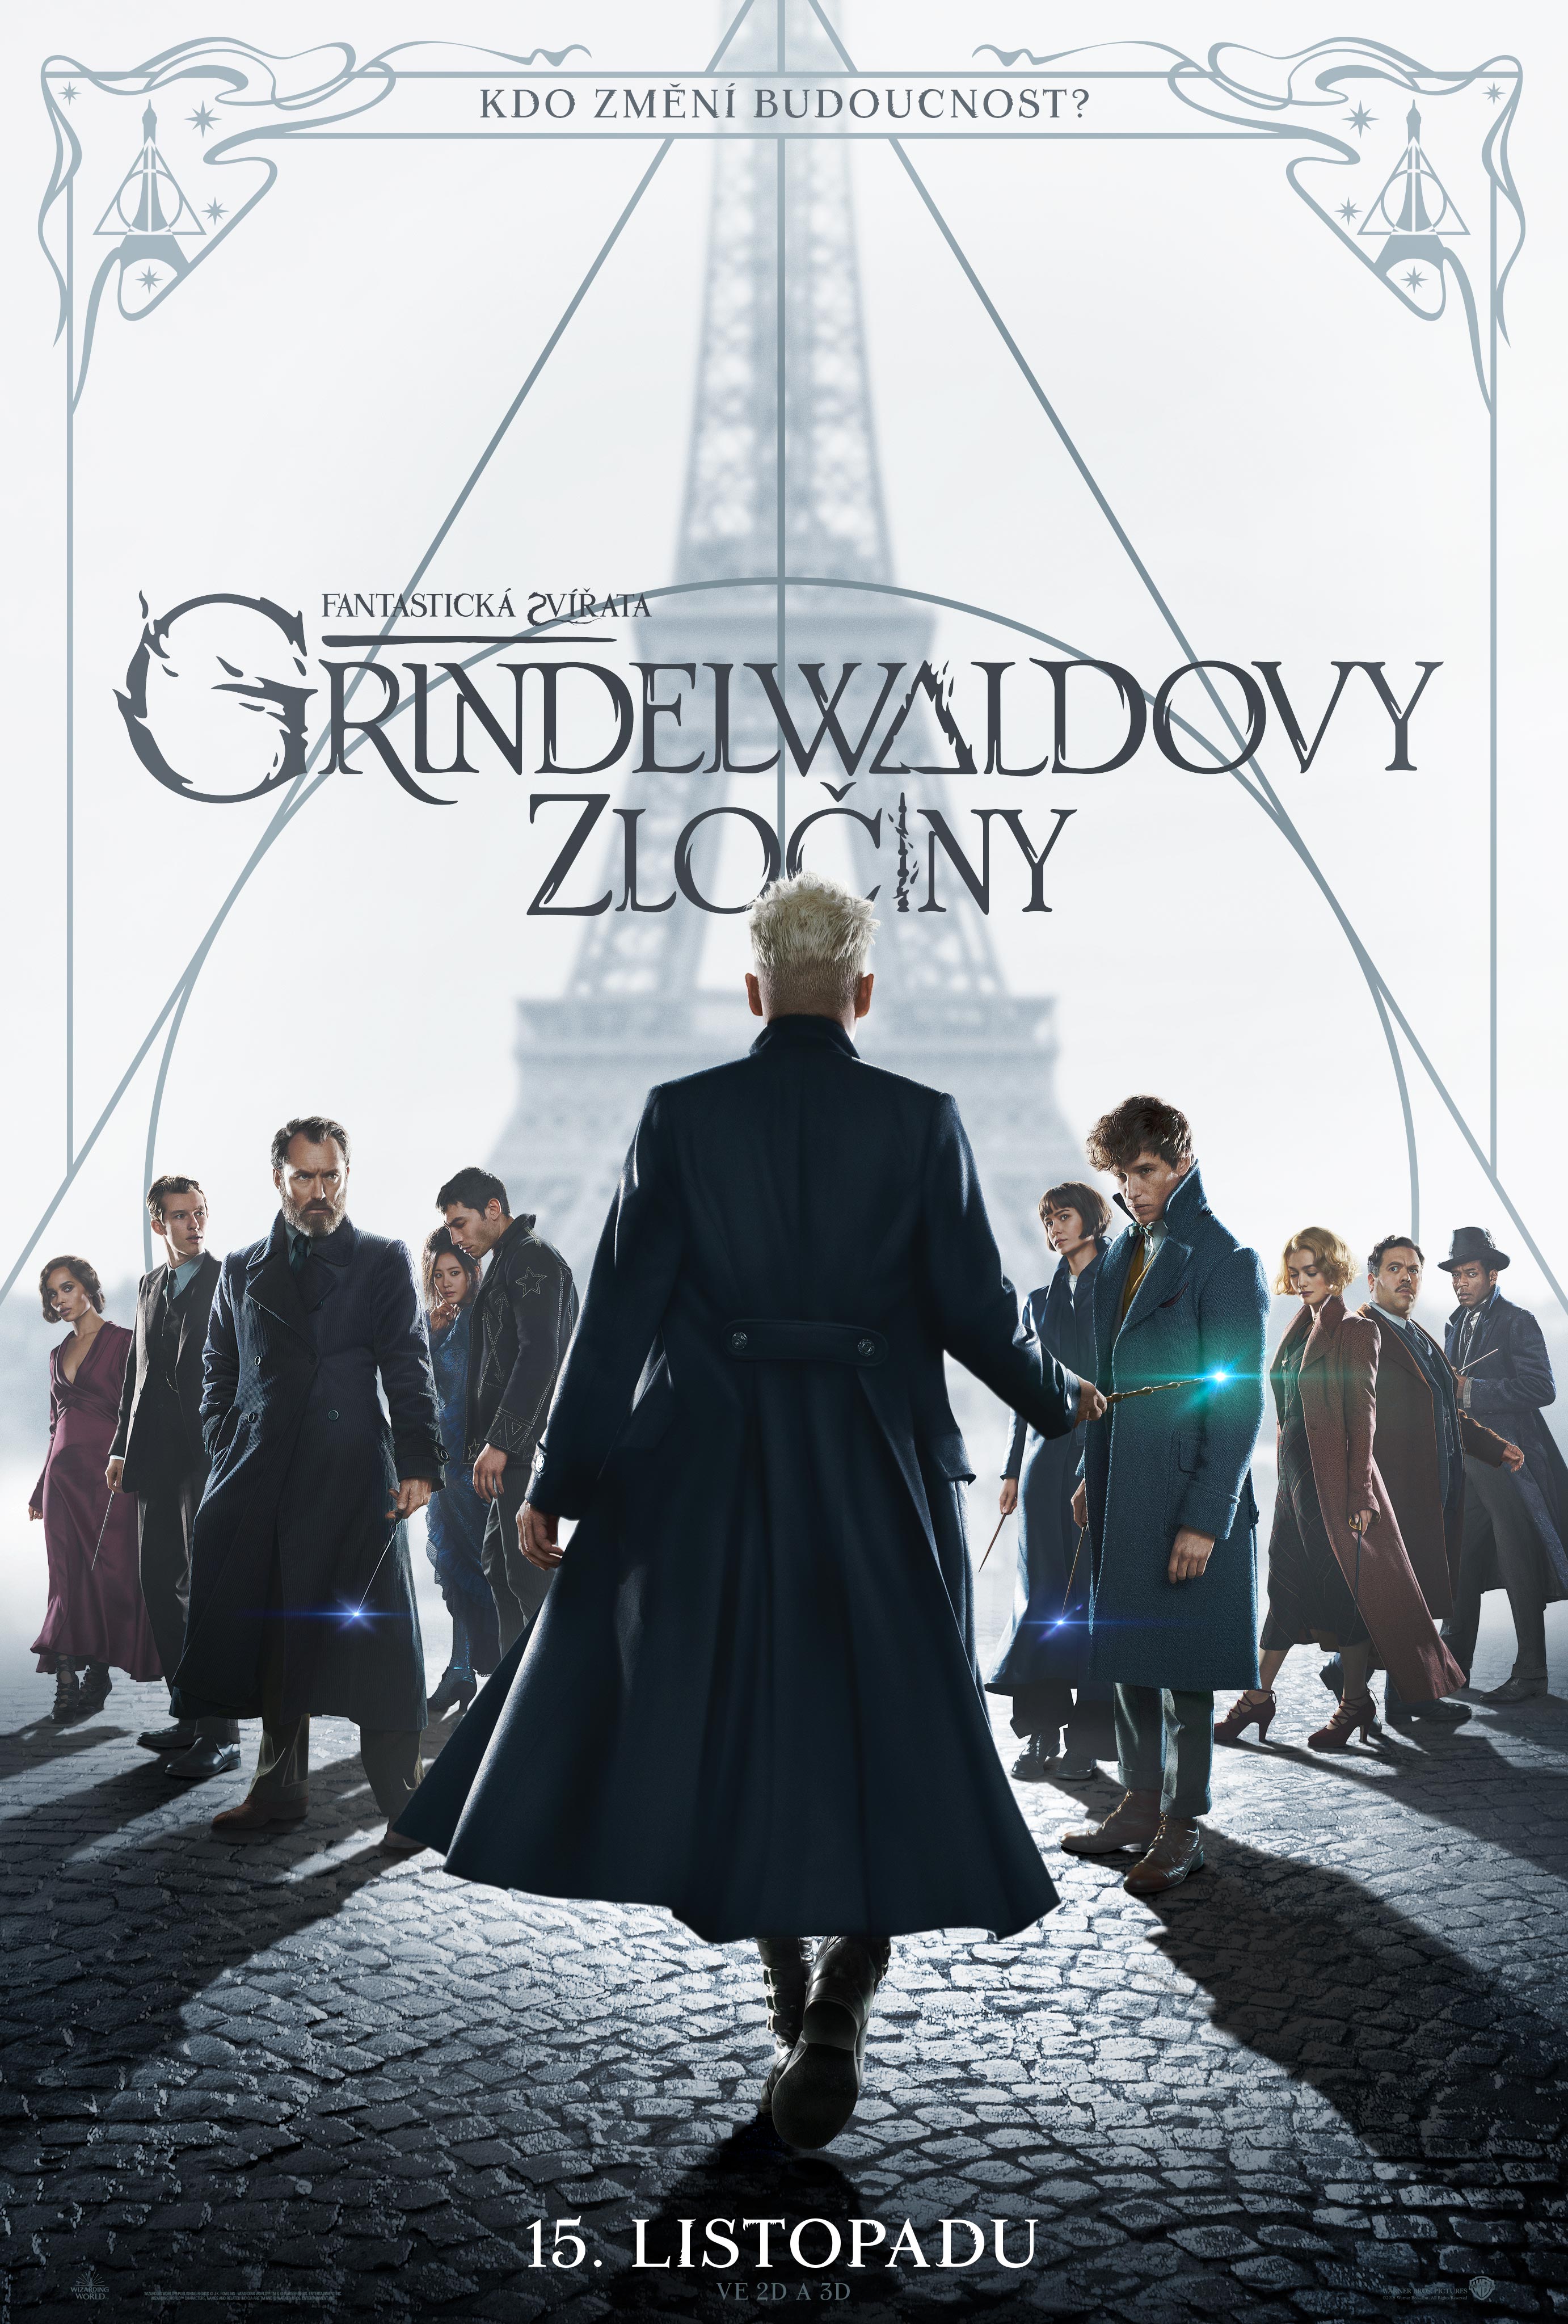 Stiahni si UHD Filmy Fantasticka zvirata: Grindelwaldovy zlociny / Fantastic Beasts: The Crimes of Grindelwald (2018)(CZ/EN)[HEVC][2160p] = CSFD 66%